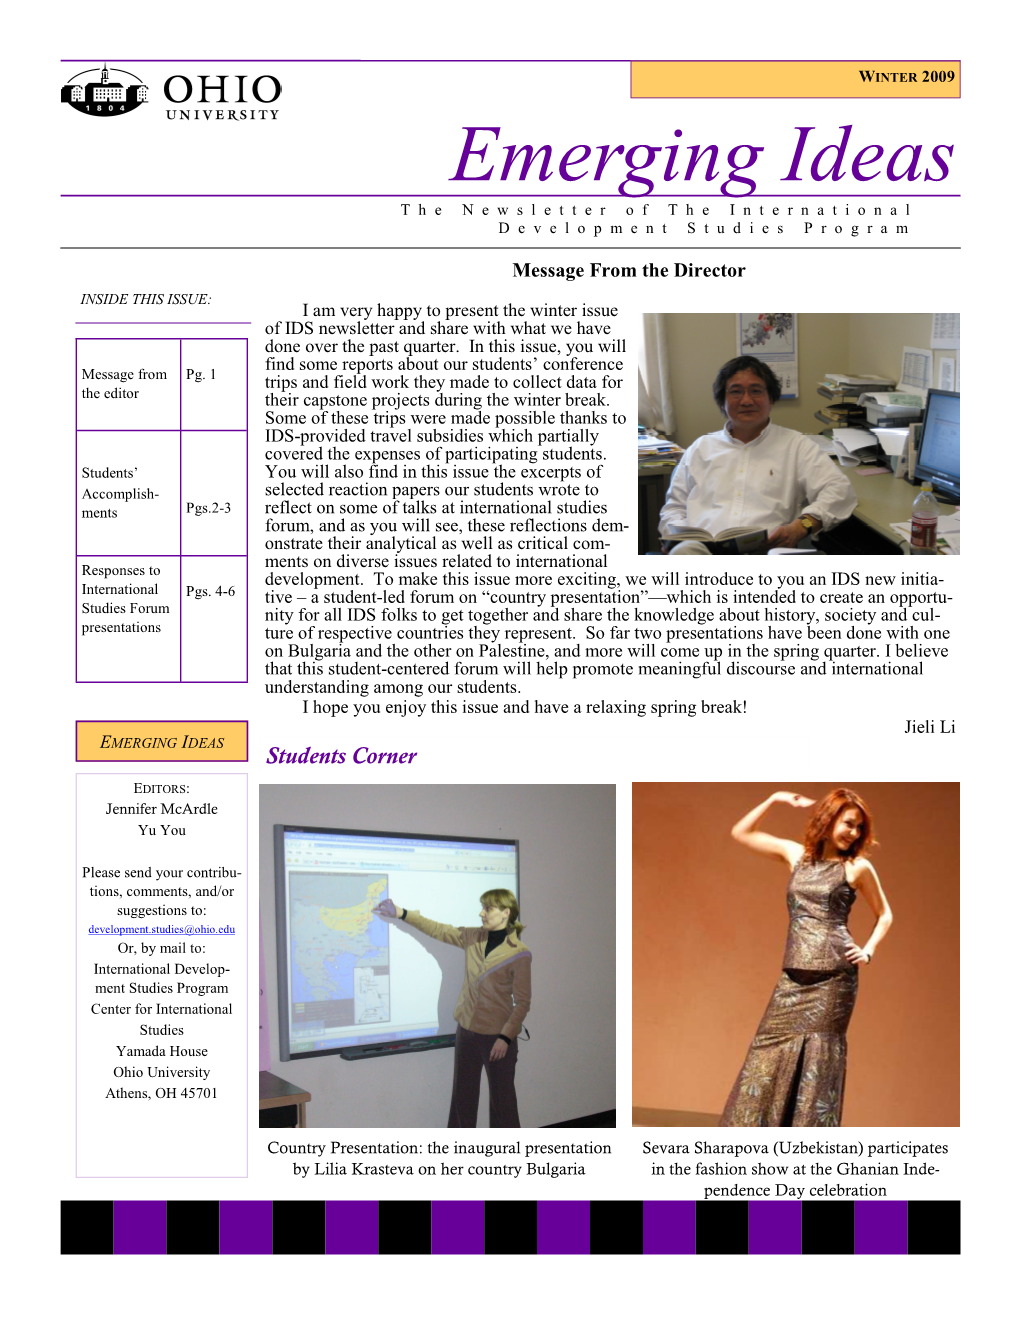 Emerging Ideas the Newsletter of the International Development Studies Program